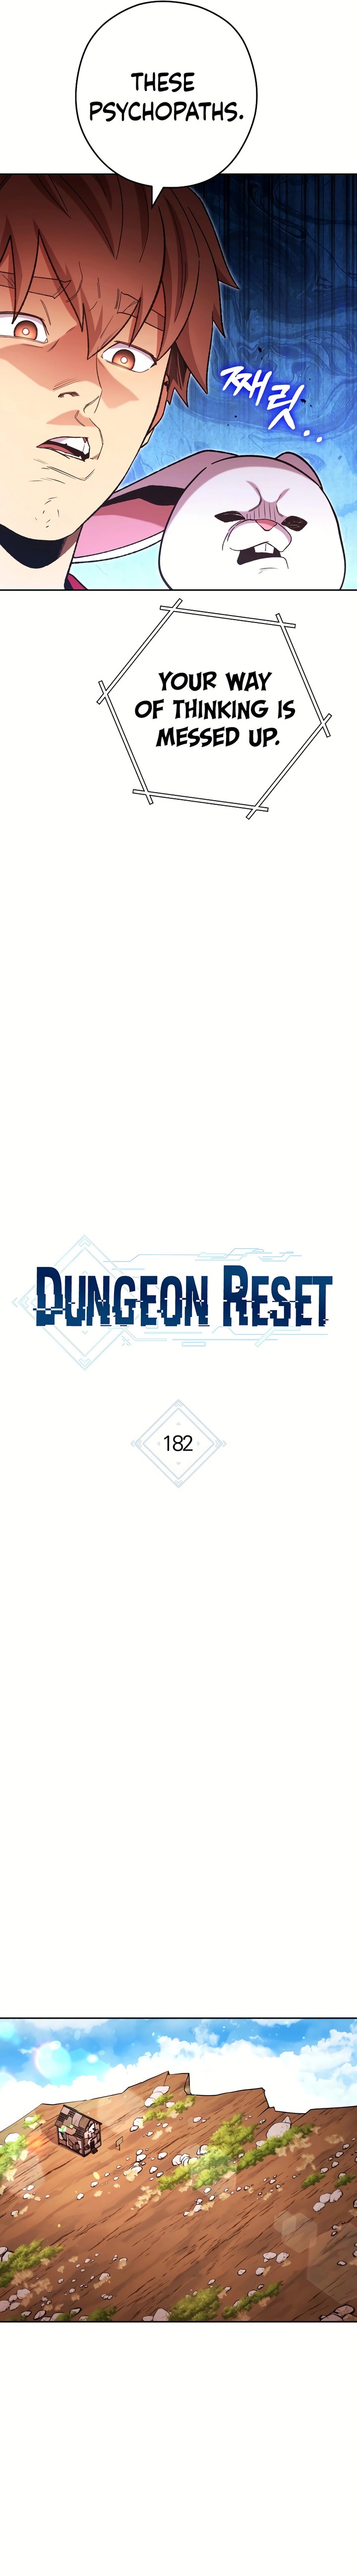 Dungeon Reset 182 6